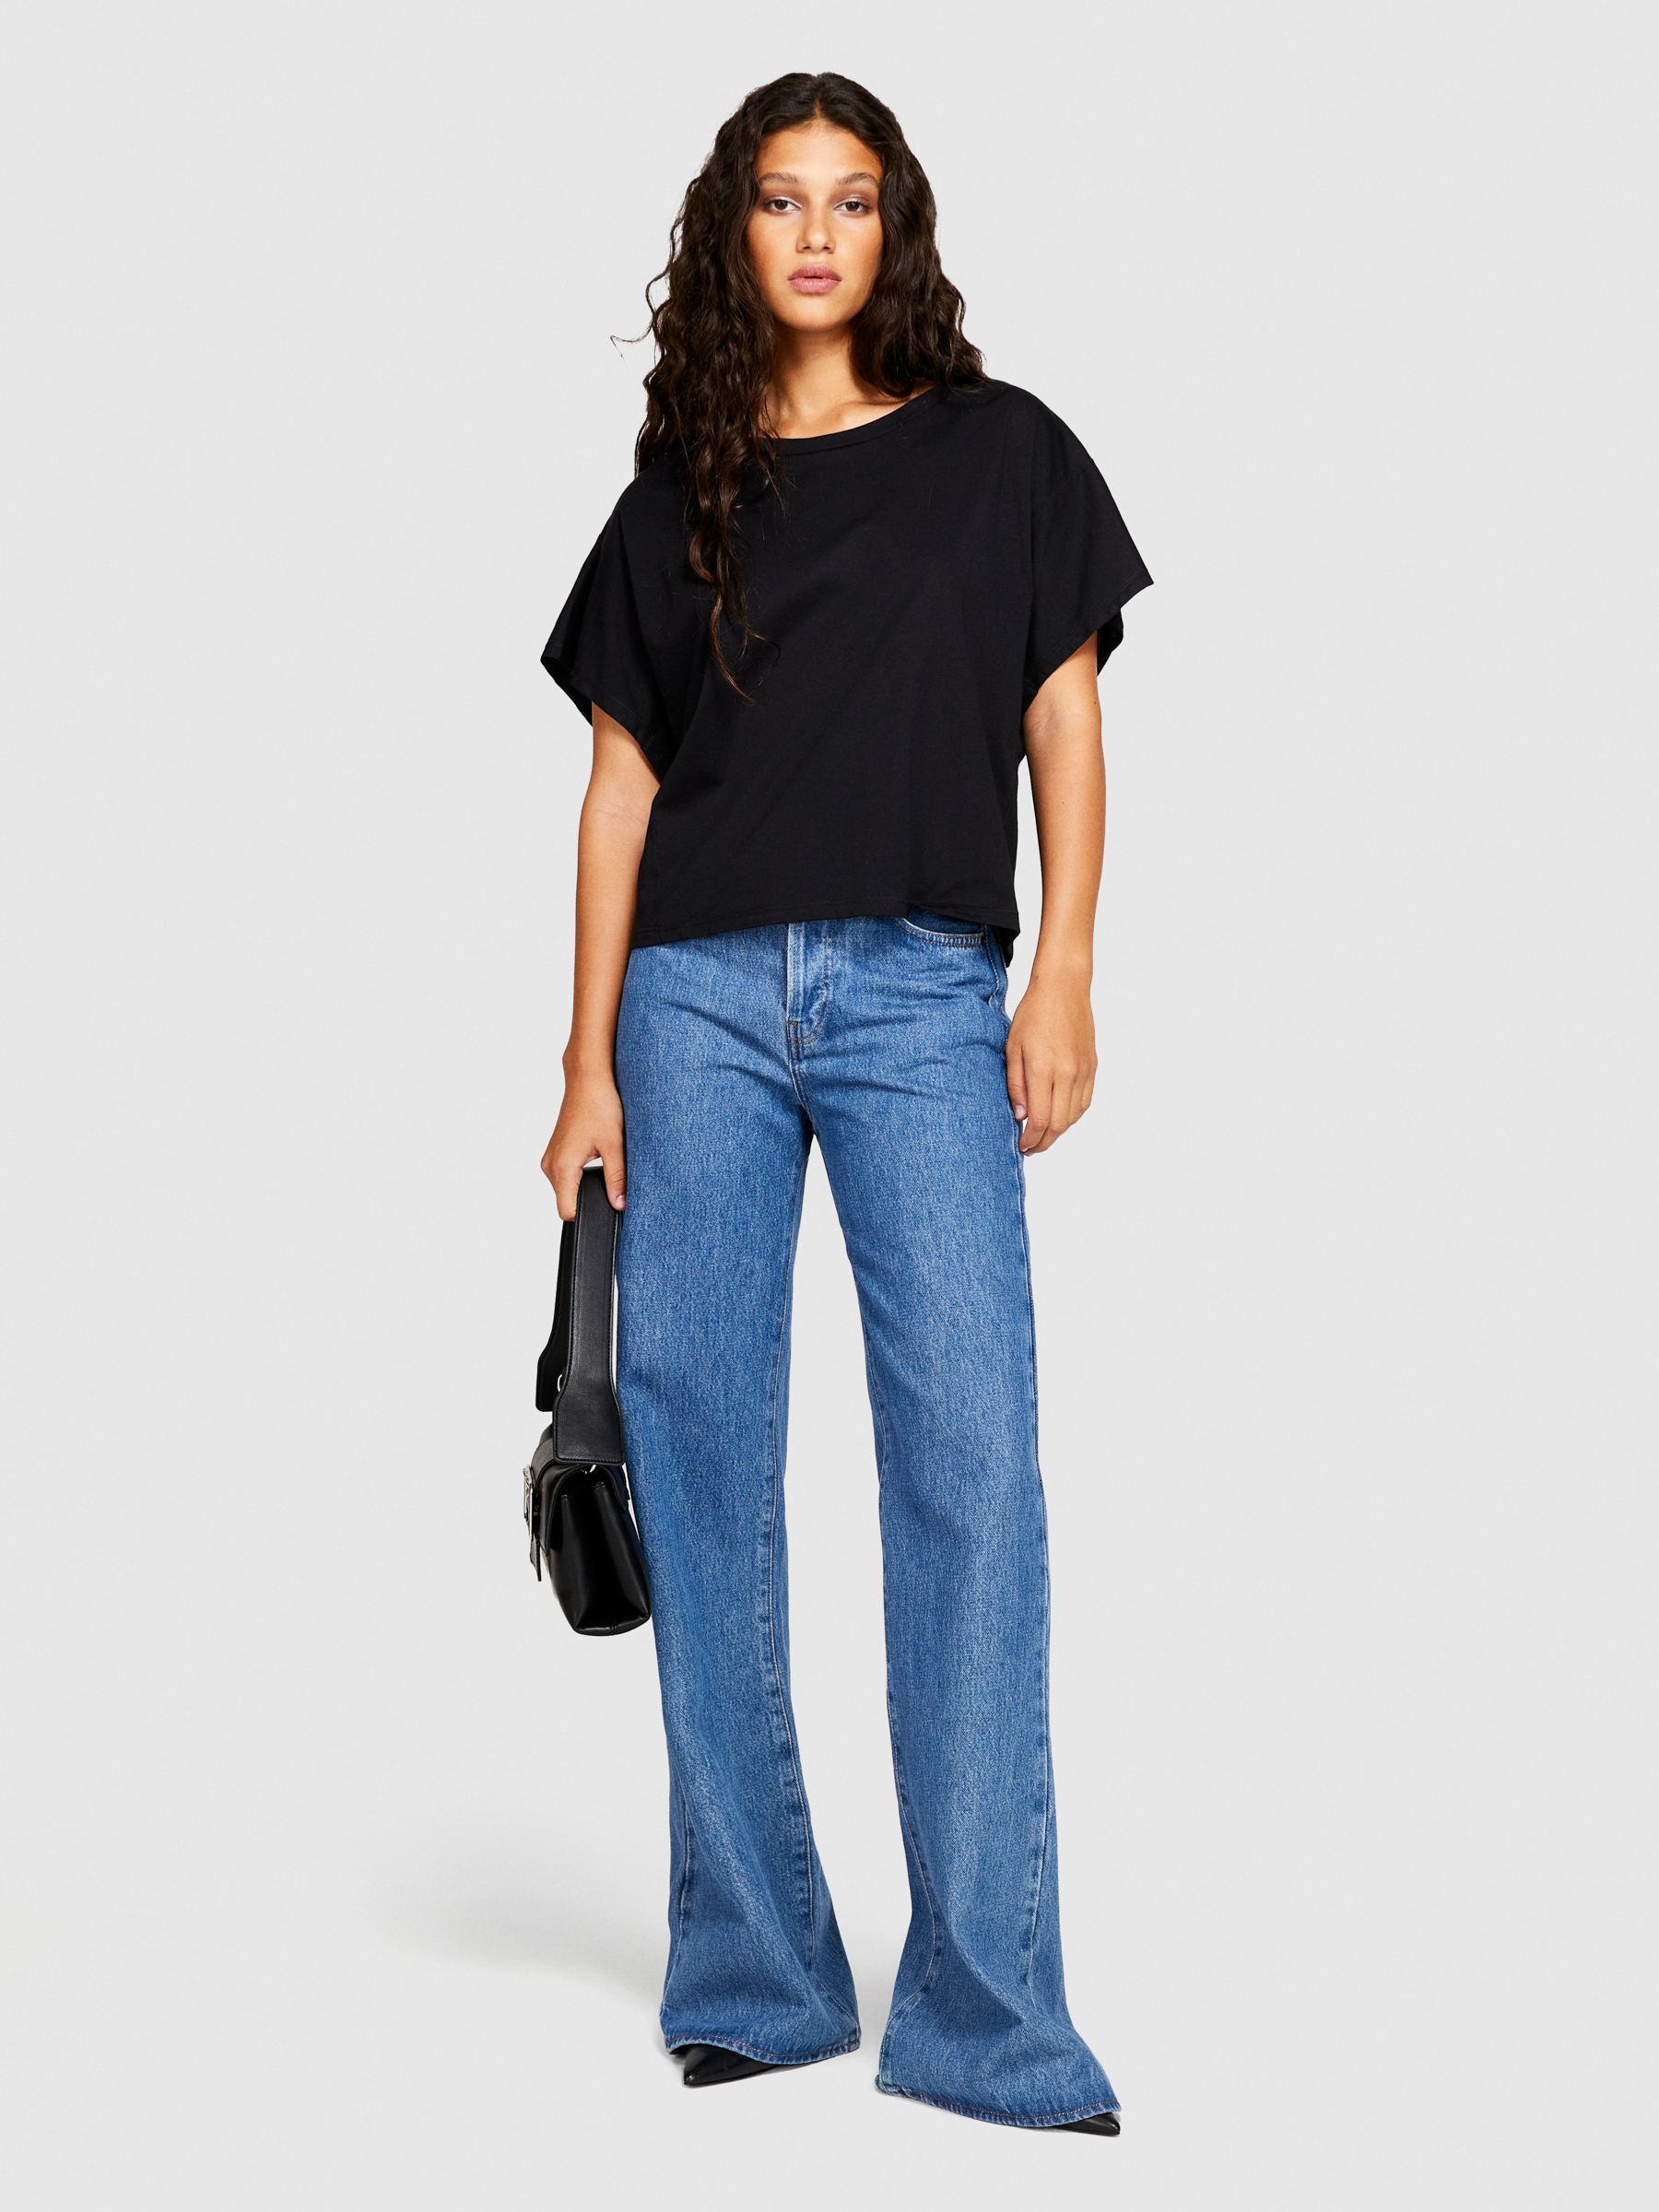 Sisley - Boxy Fit T-shirt, Woman, Black, Size: XS